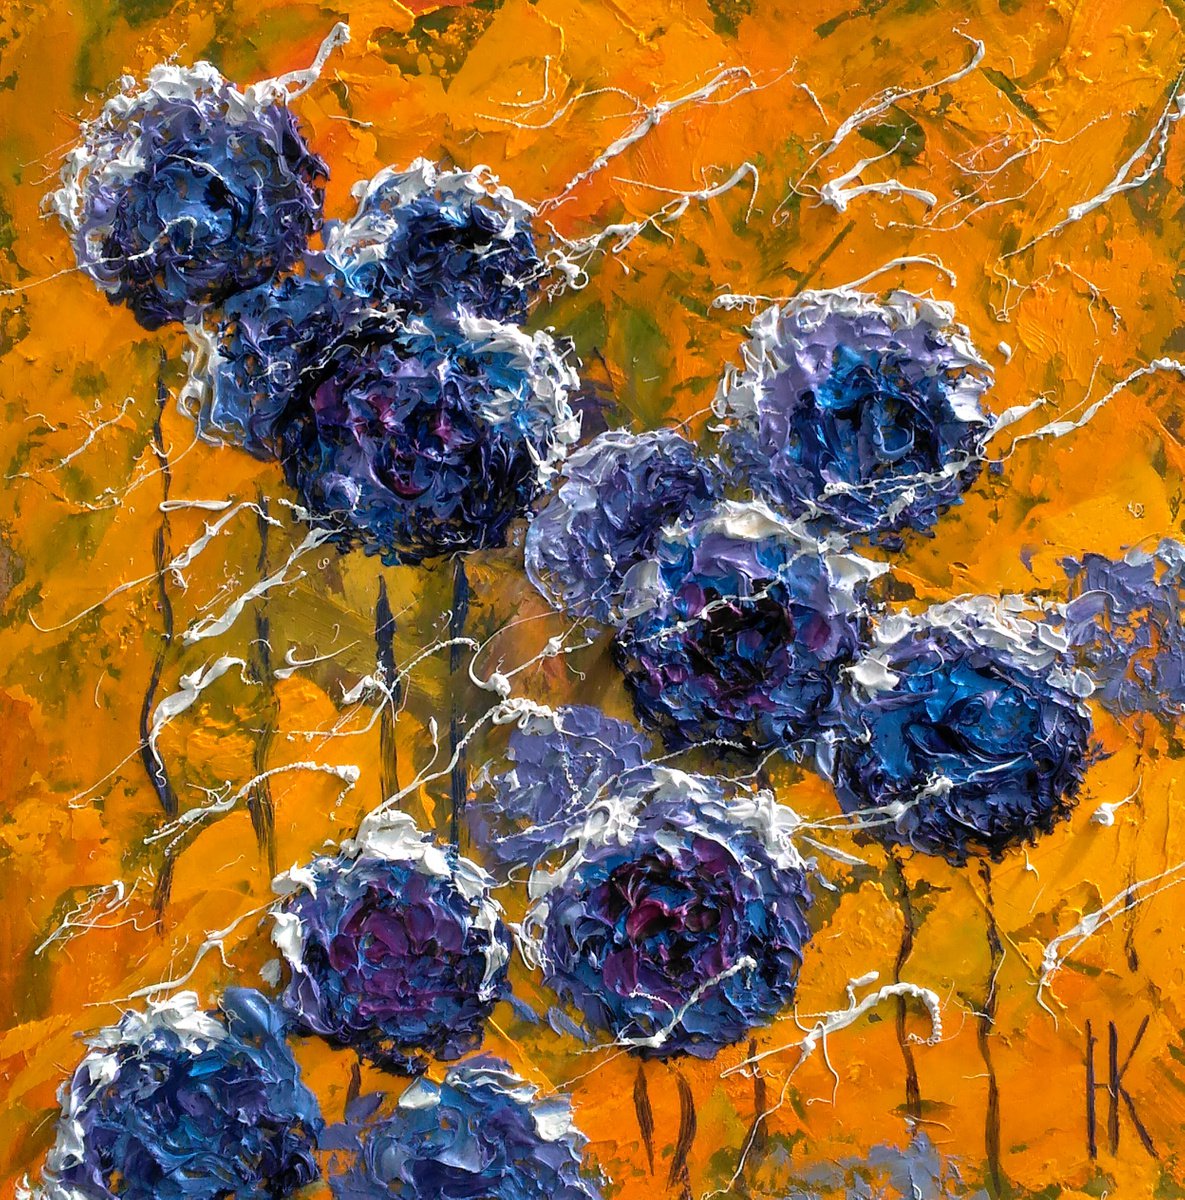 Dandelion Painting Floral Original Art Meadow Abstract Wild Flowers Artwork Oil Impasto Sm... by Halyna Kirichenko